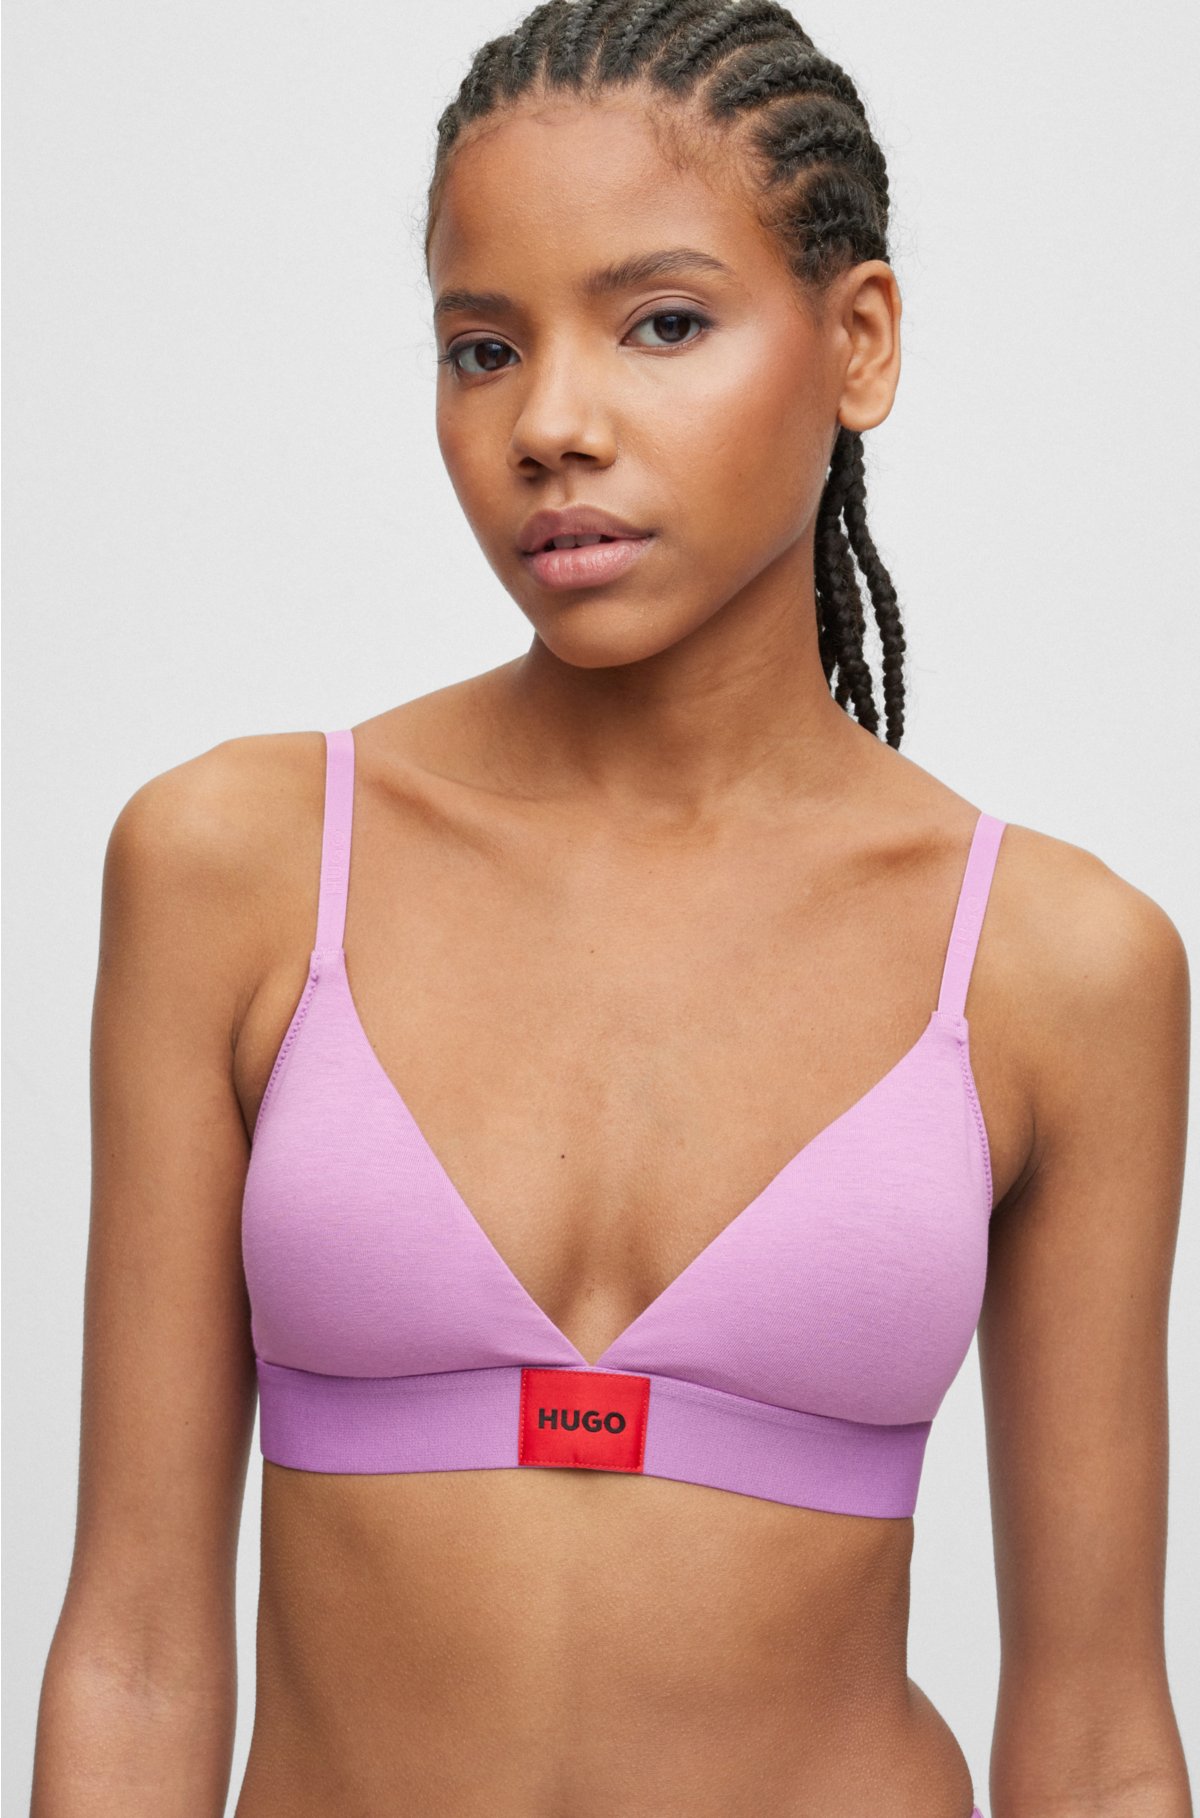 HUGO triangle - Stretch-cotton label with bra logo red